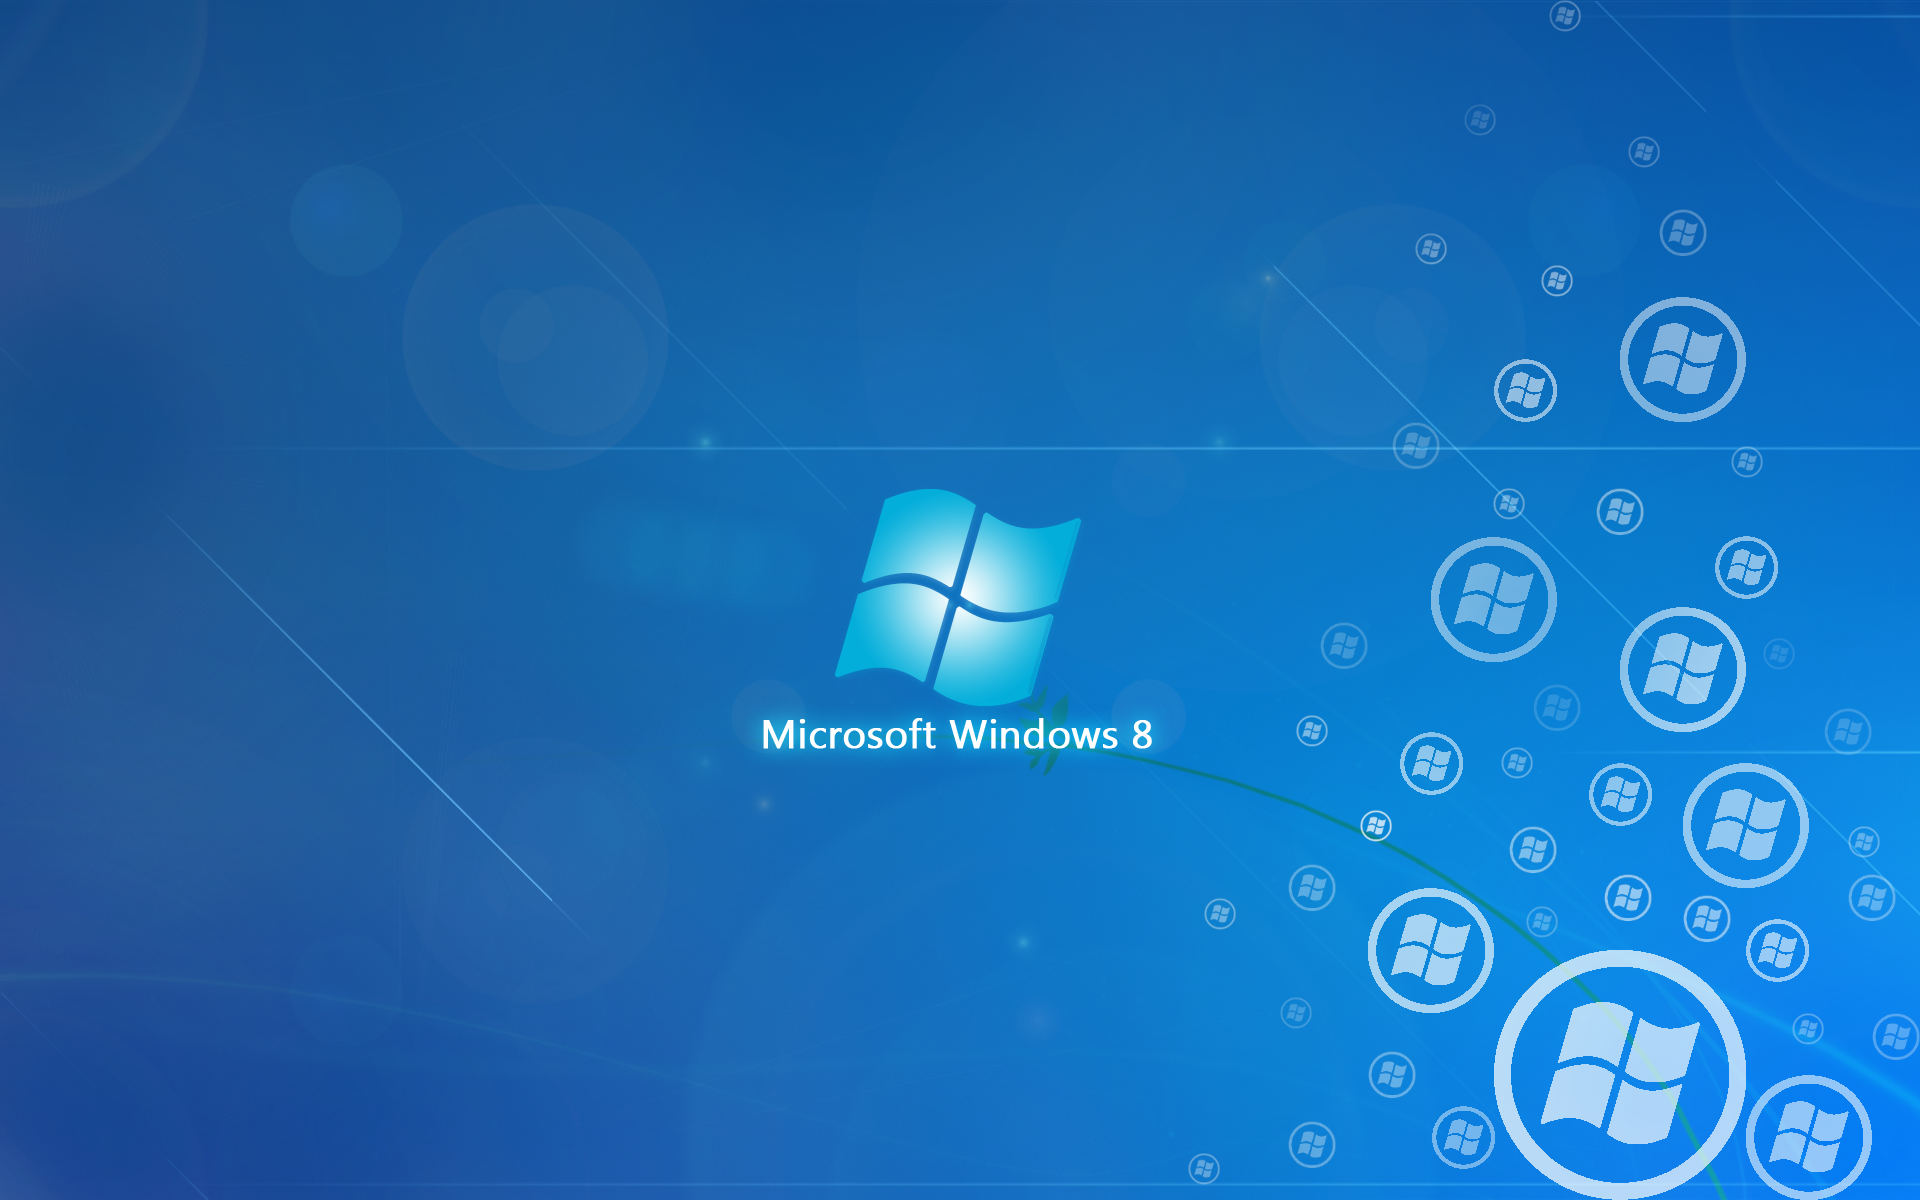 Windows 8 wallpaper hd